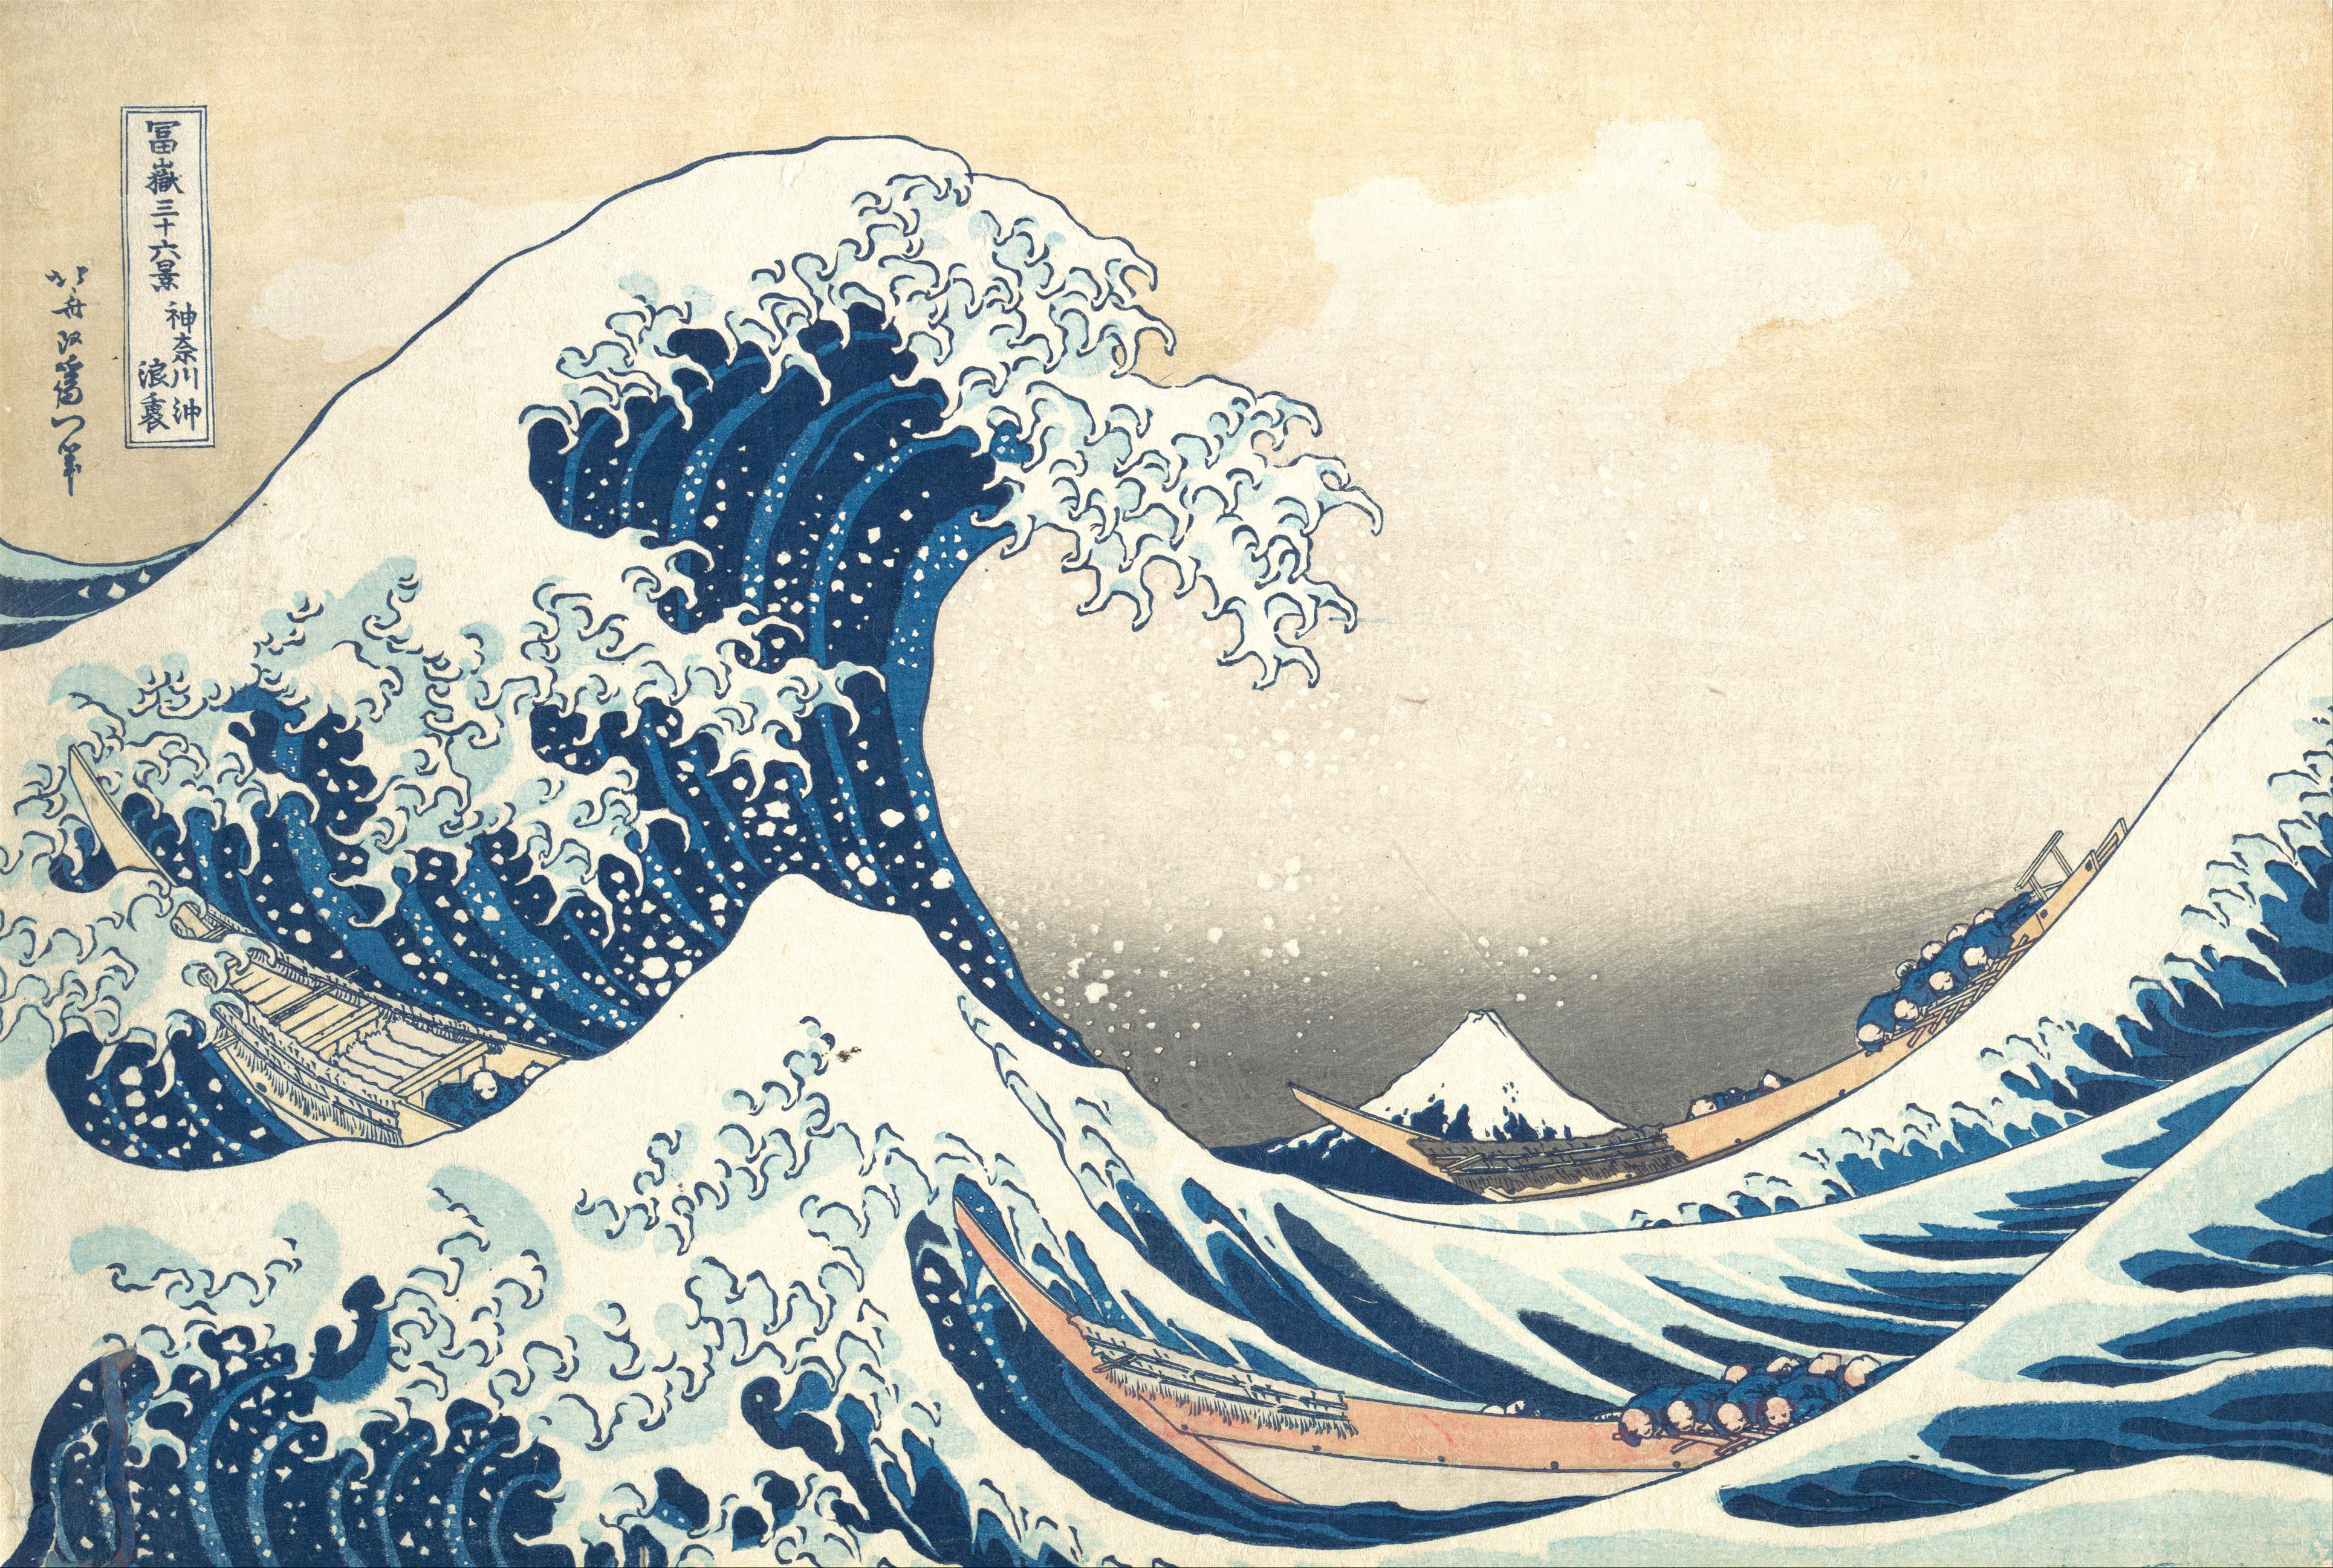 https://uploads5.wikiart.org/00129/images/katsushika-hokusai/the-great-wave-off-kanagawa.jpg